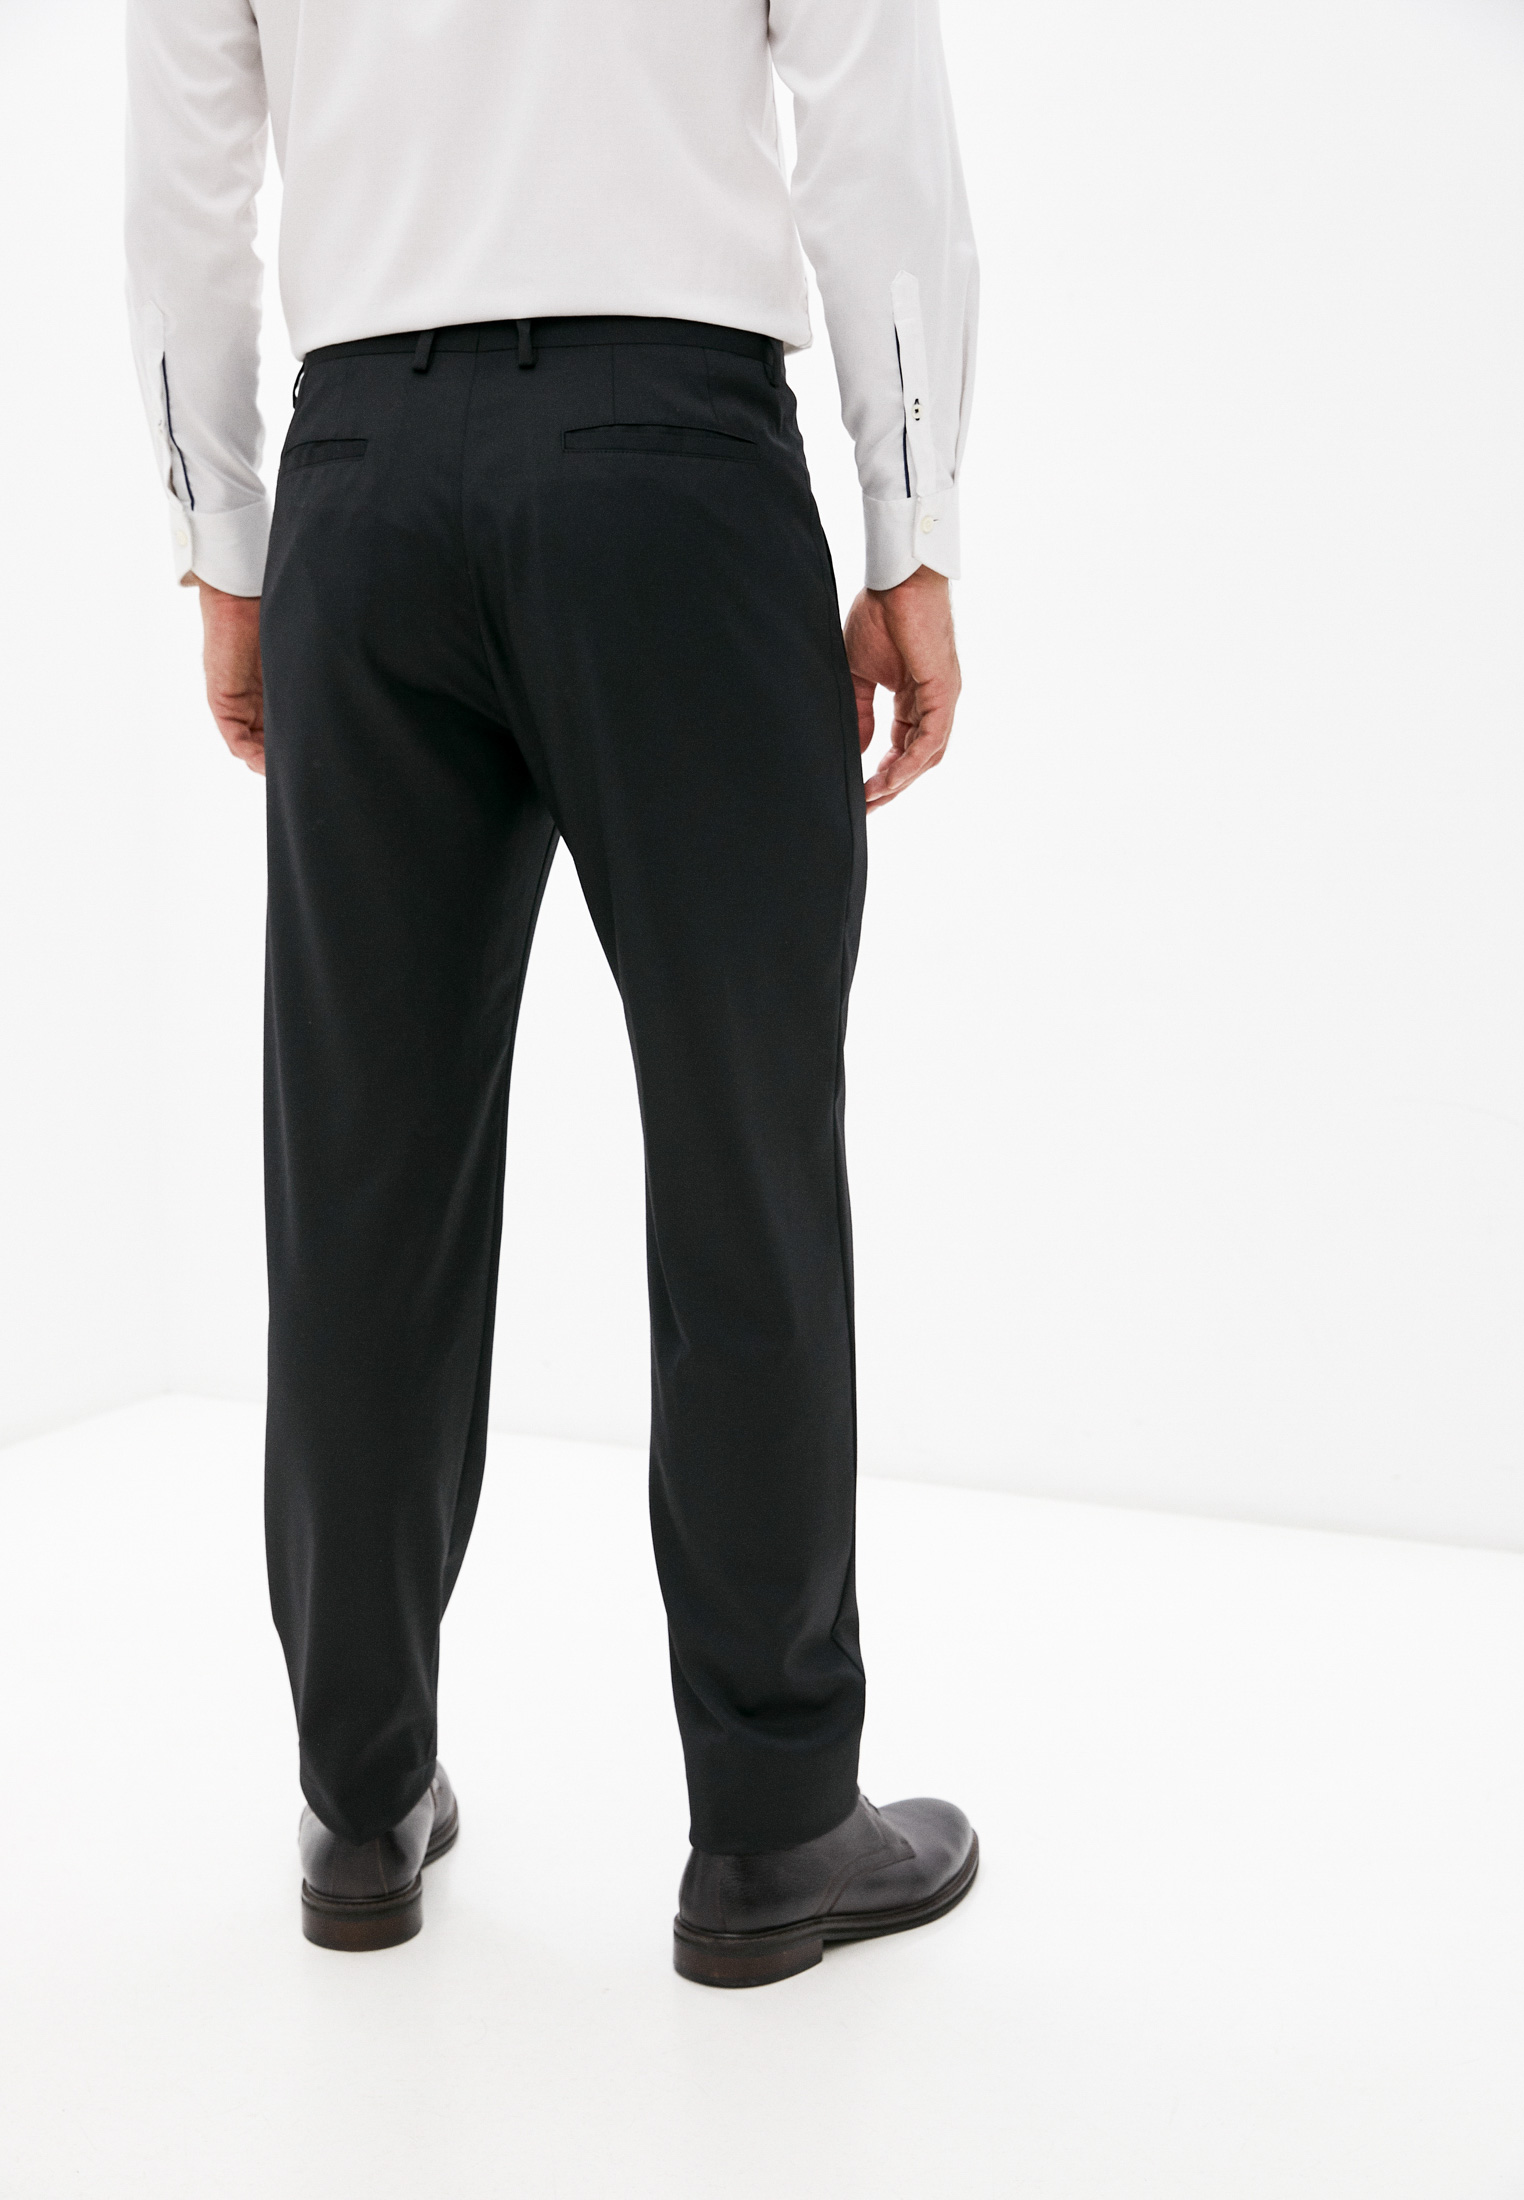 Мужские классические брюки Emporio Armani (Эмпорио Армани) W1P210 W1026: изображение 4